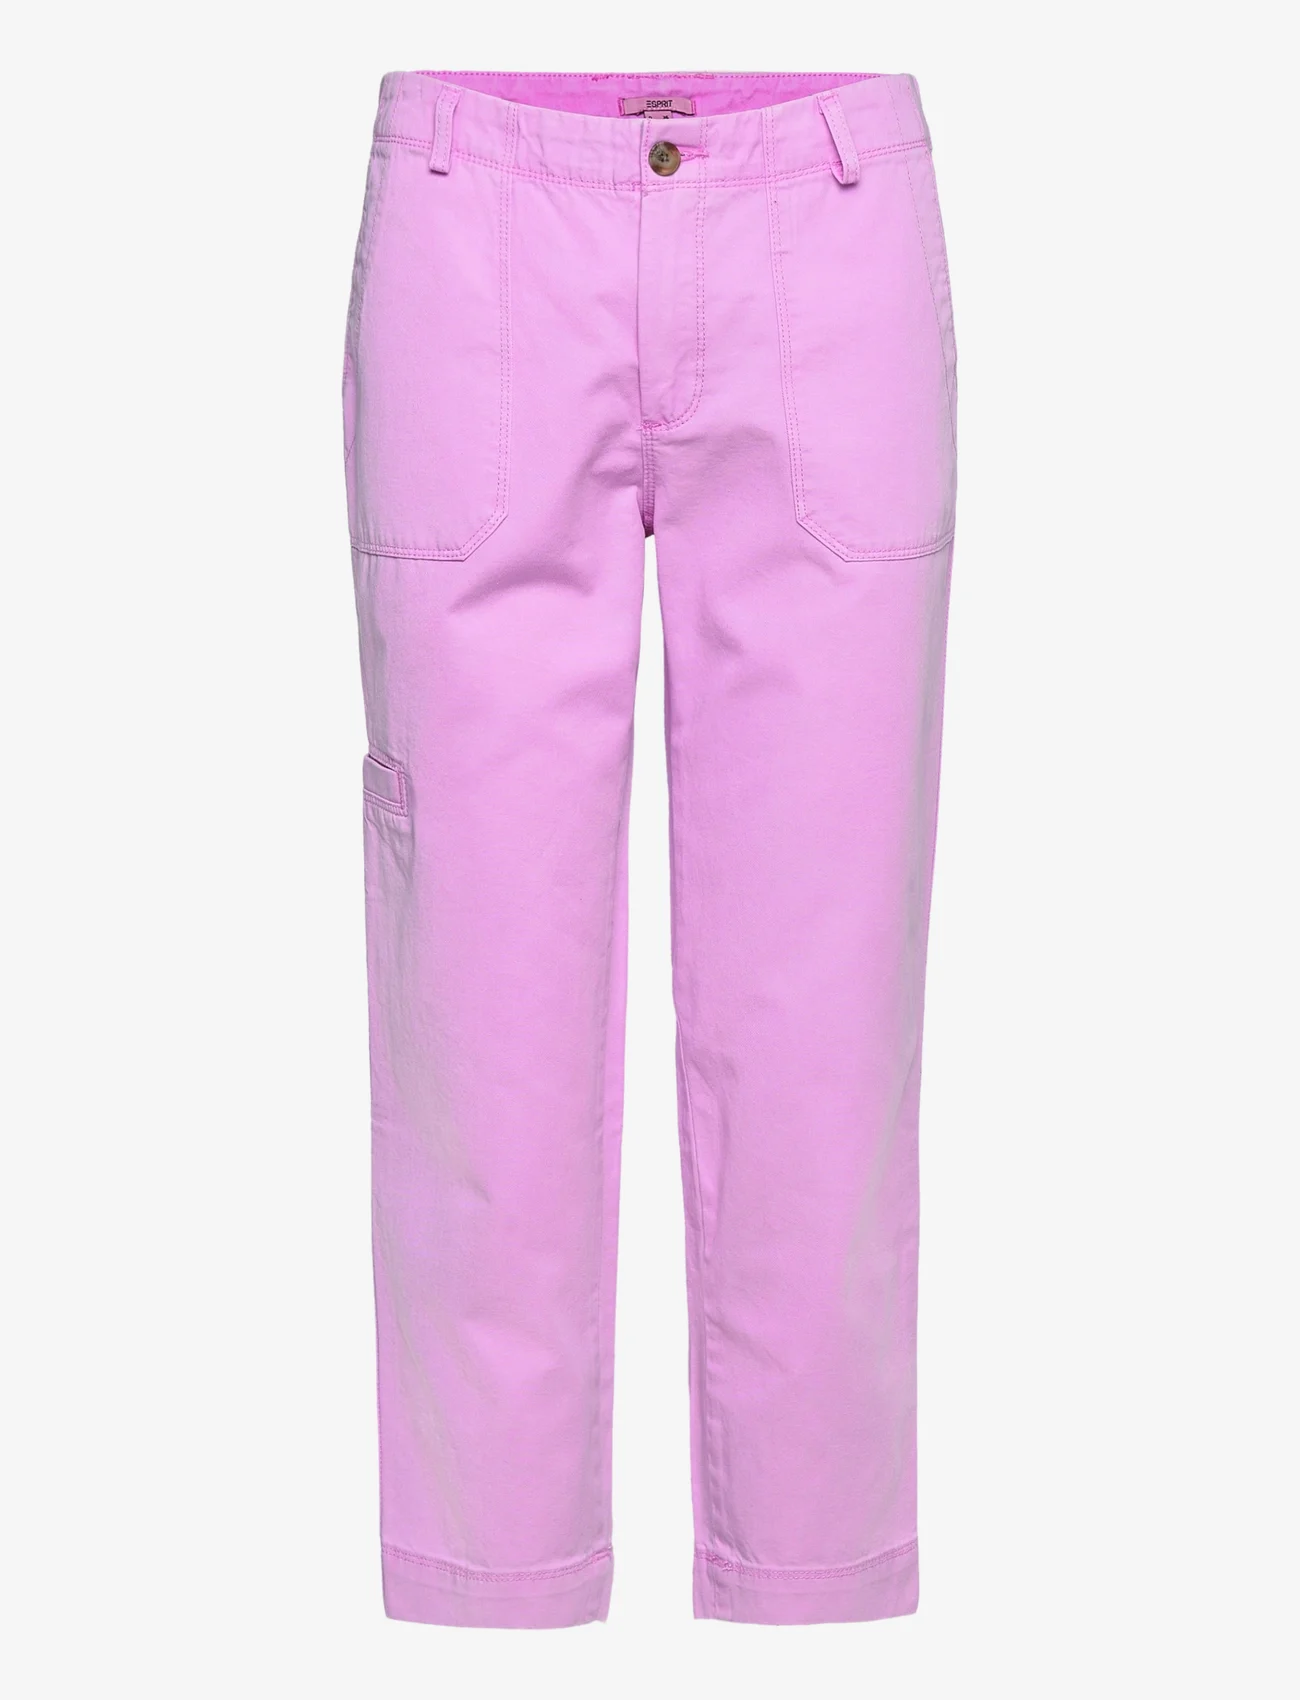 Esprit Casual - Women Pants woven regular - chinot - pink - 0